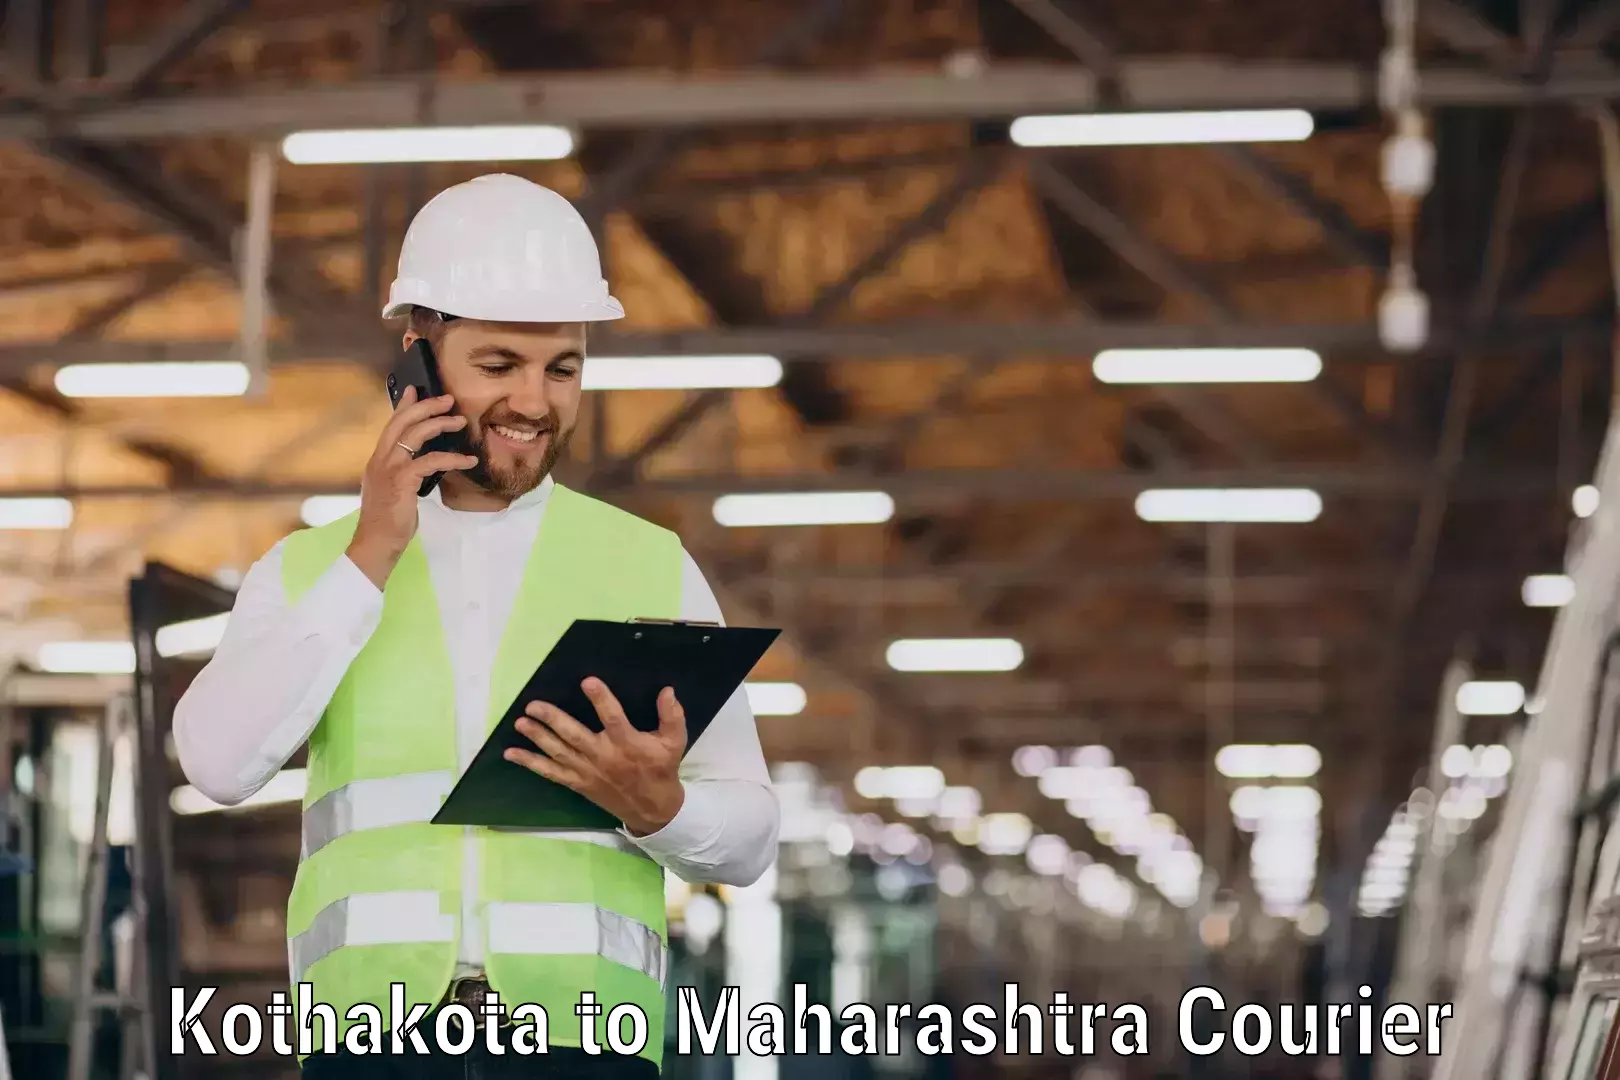 Multi-service courier options in Kothakota to Maharashtra